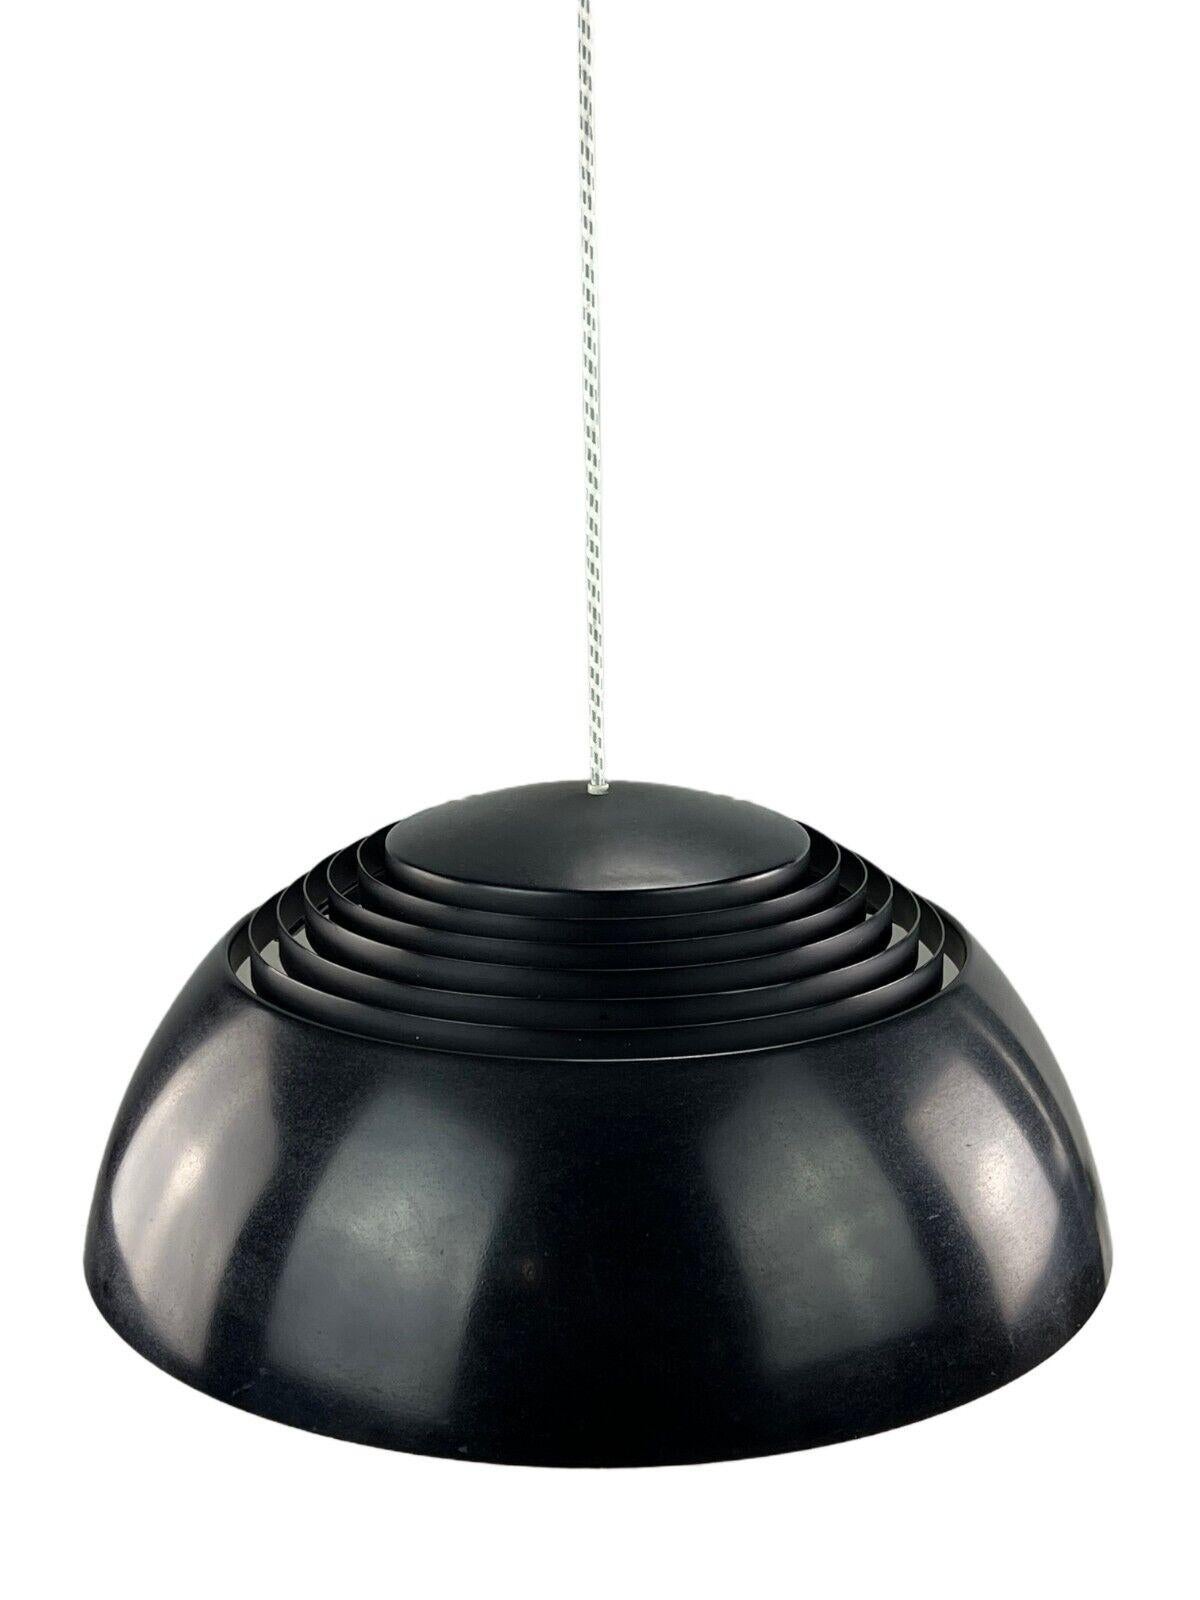 60s 70s hanging lamp ceiling lamp Louis Poulsen AJ Royal 500 Arne Jacobsen

Object: ceiling lamp

Manufacturer: Louis Poulsen

Condition: good - vintage

Age: around 1960-1970

Dimensions:

Diameter = 50cm
Height = 21cm

Other